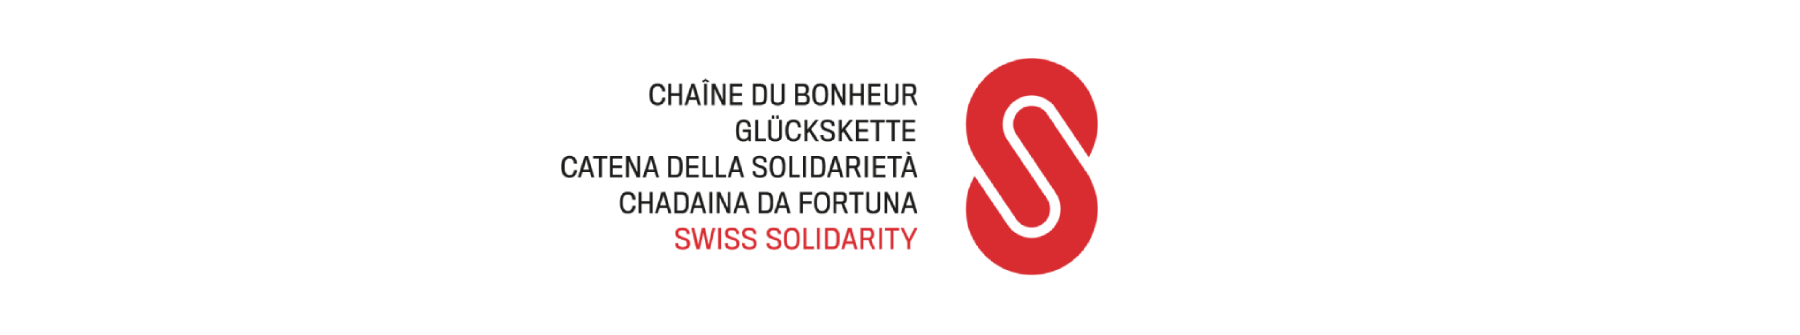 Logo Catena della solidarieta